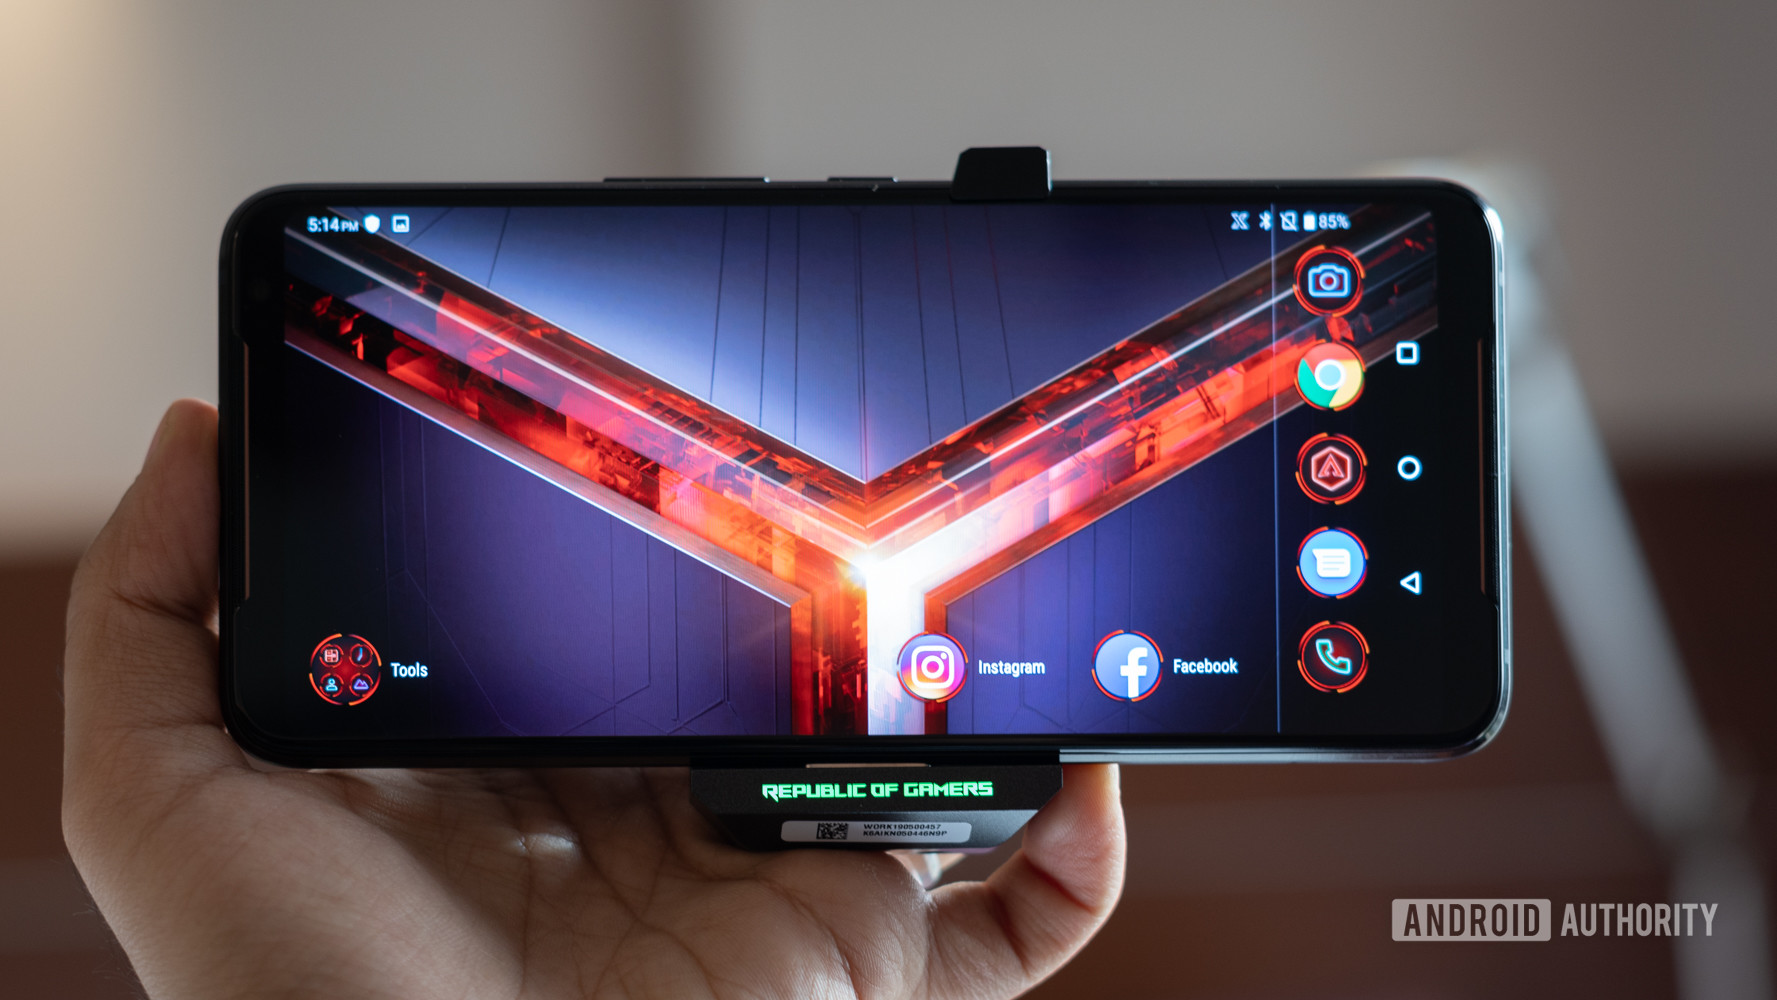 Asus ROG Phone 2 display with air cooler